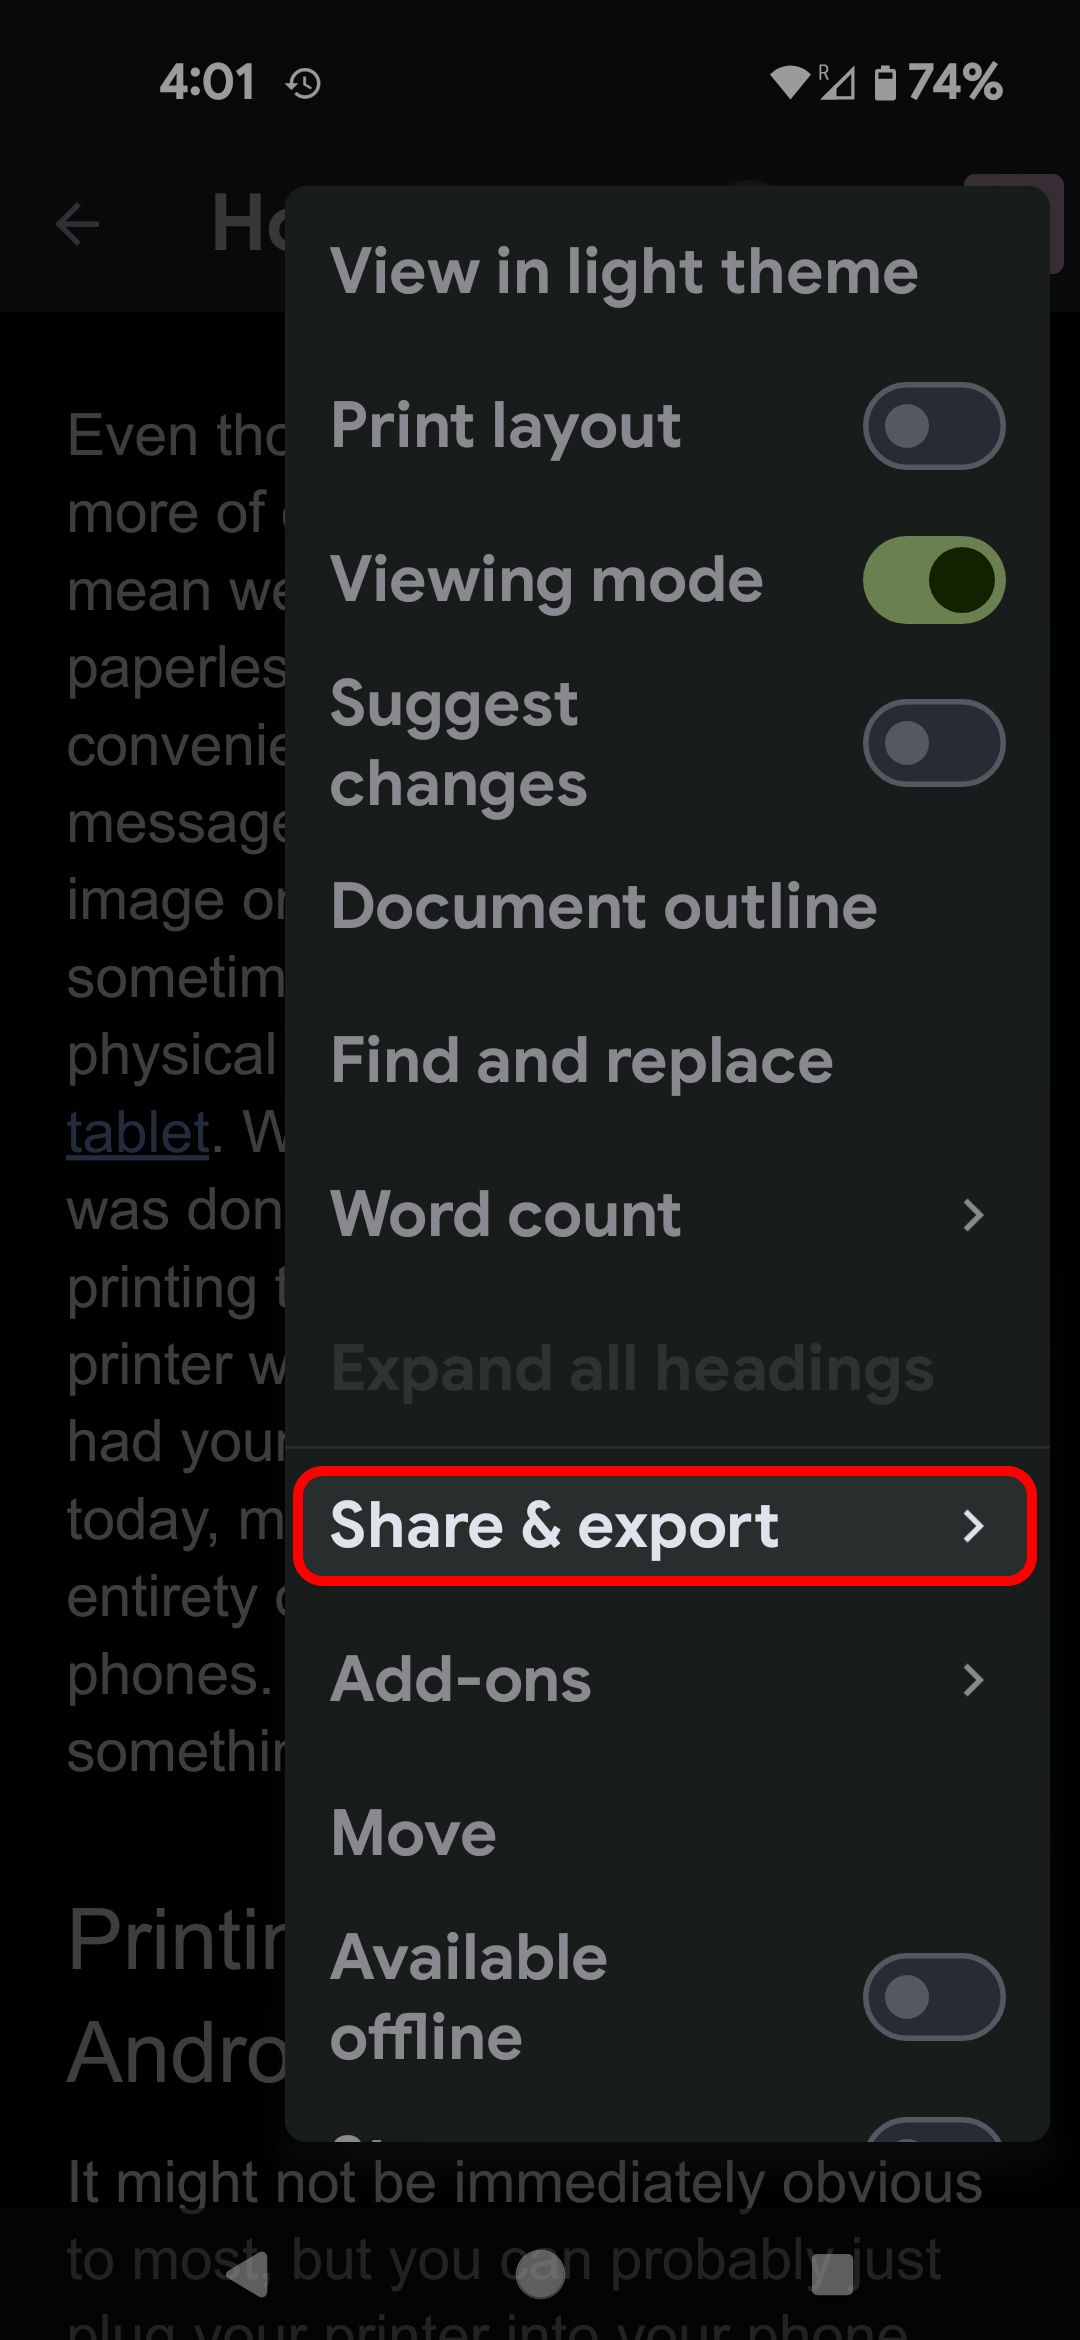 Google Docs document menu highlighting the Share & export option